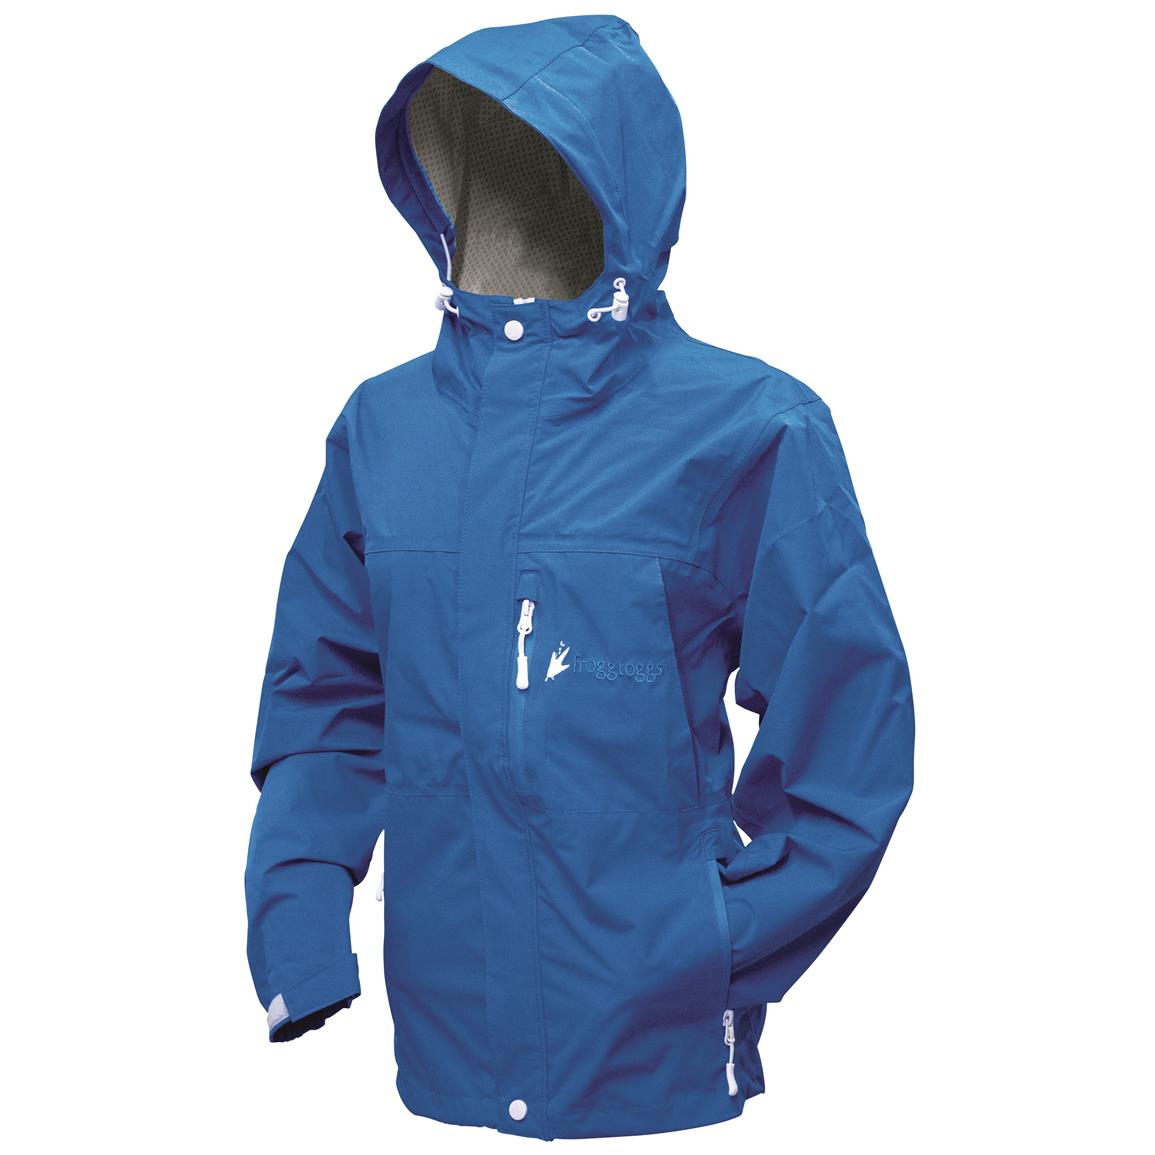 frogg toggs Women's Waterproof Java Toadz 2.5 Jacket, Electric Blue